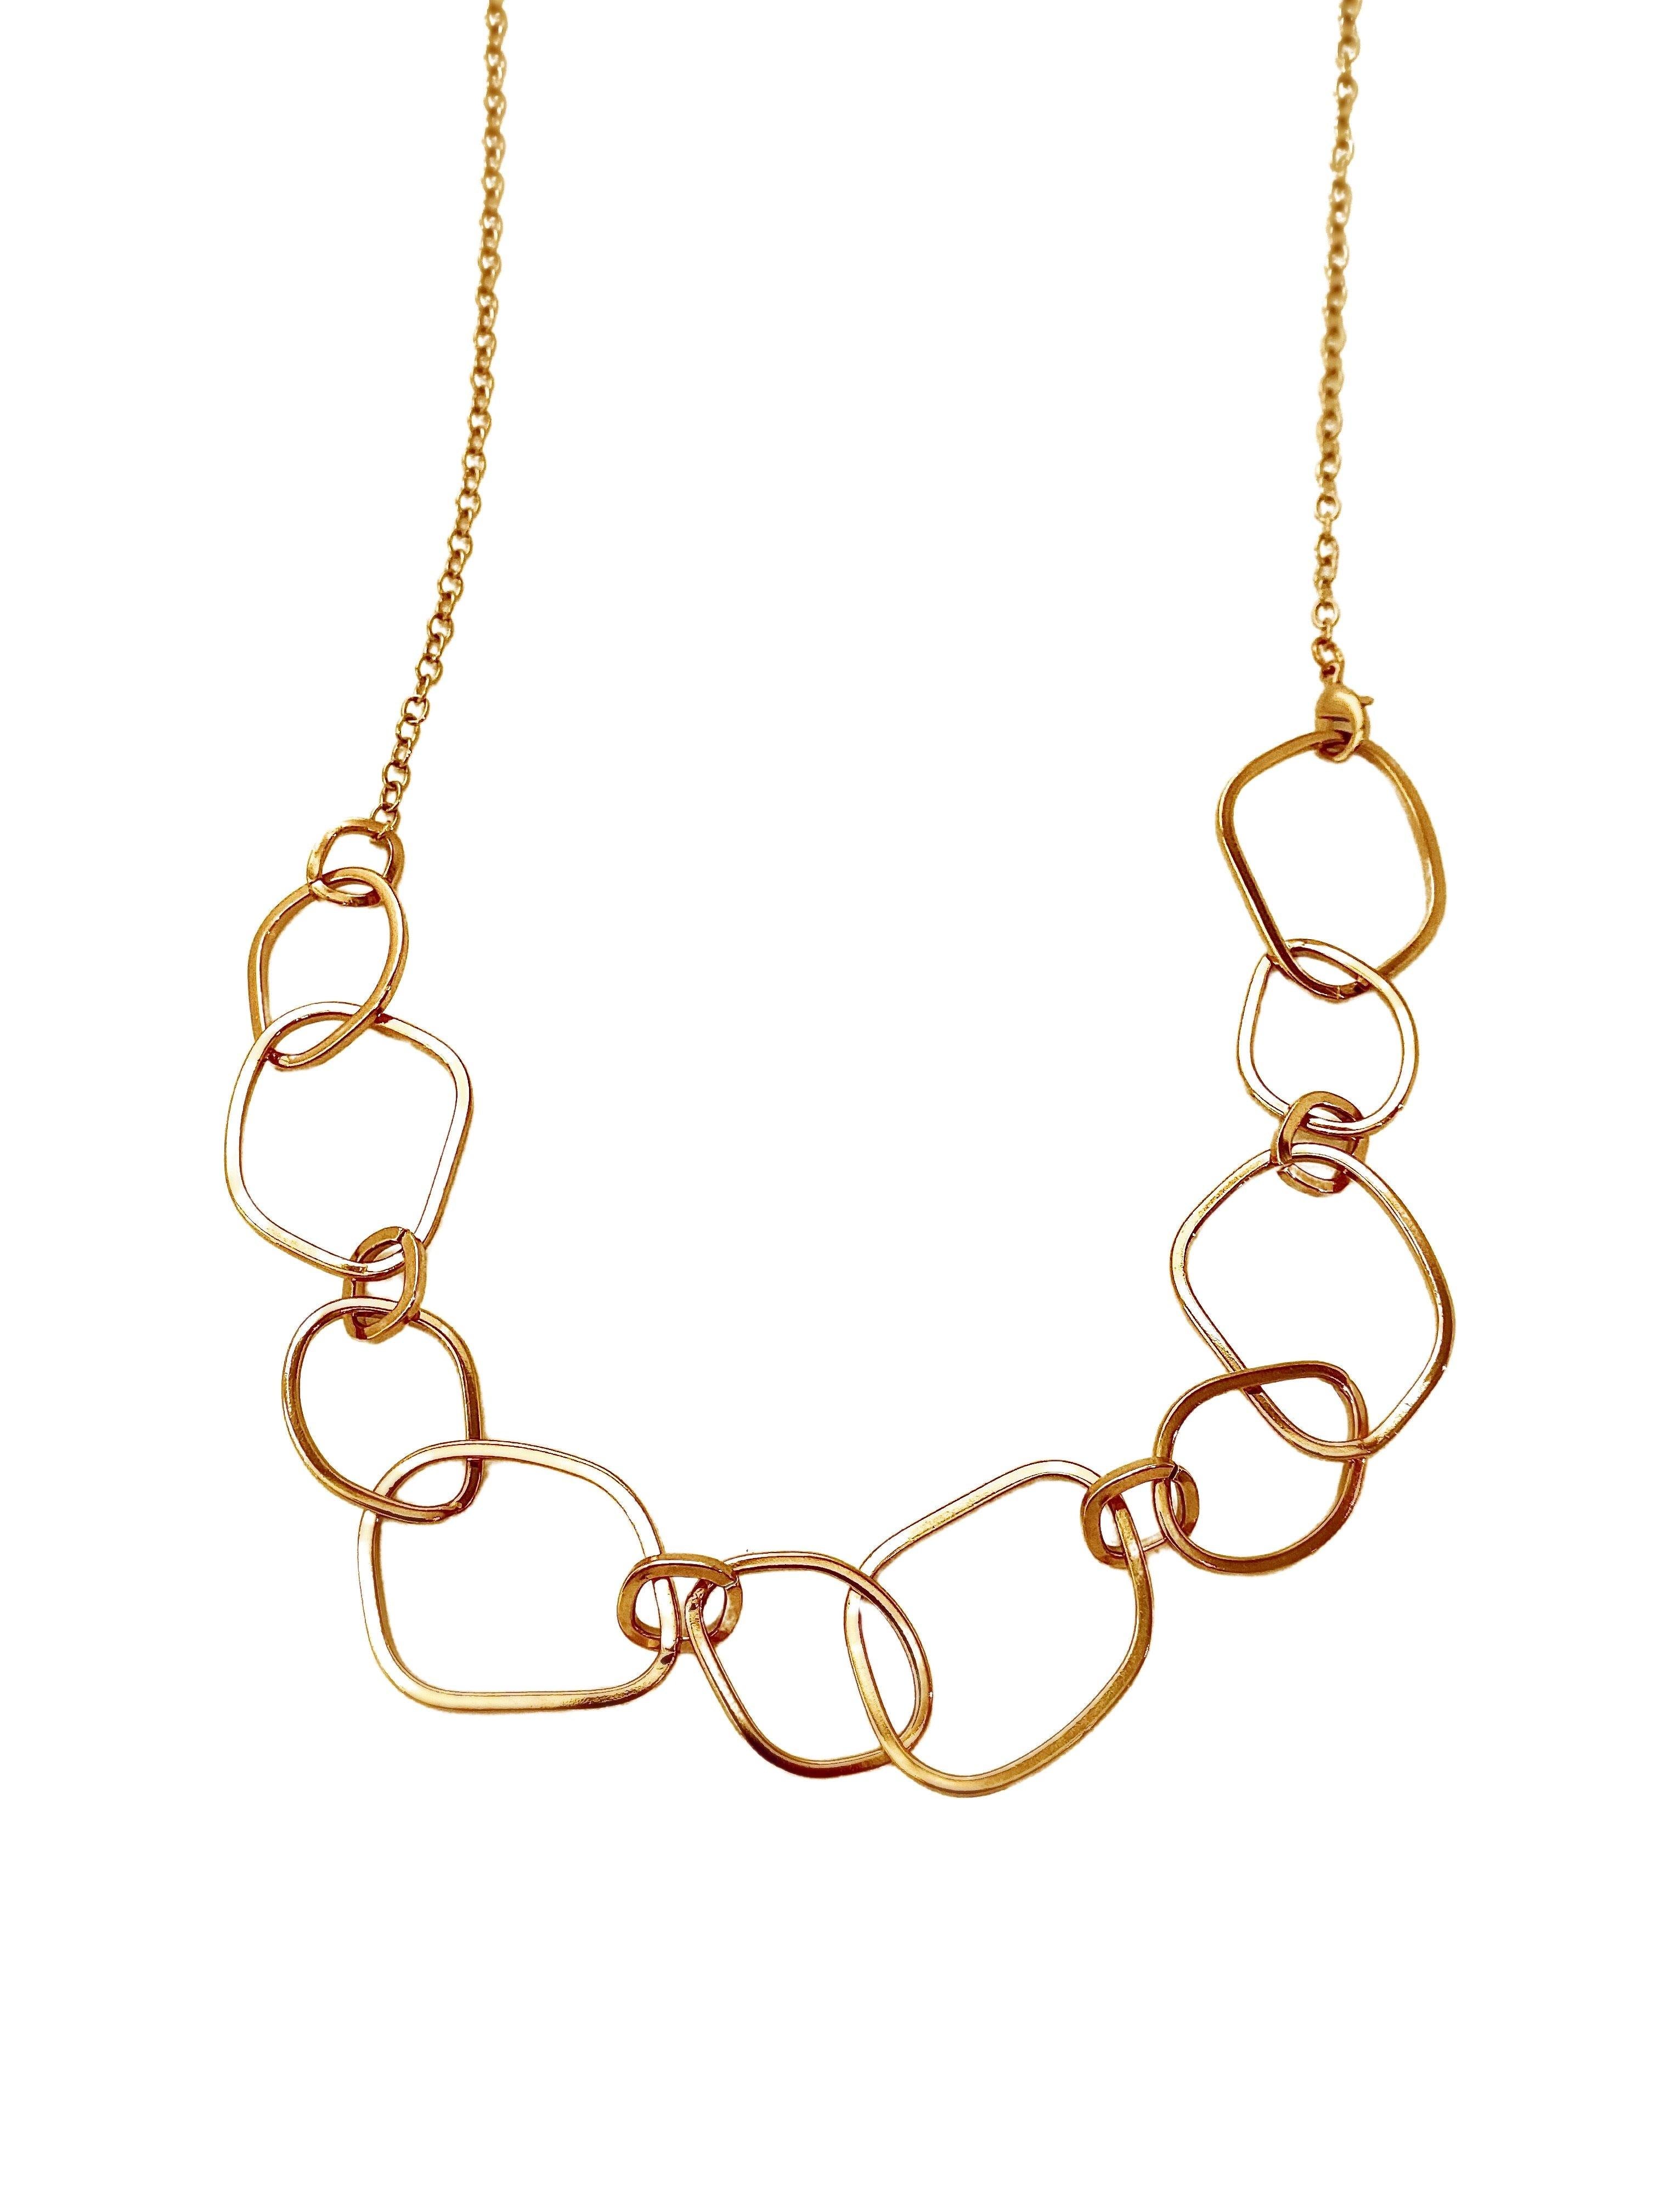 Statement Adjustable Chain Necklace - Irit Sorokin Designs Jewelry